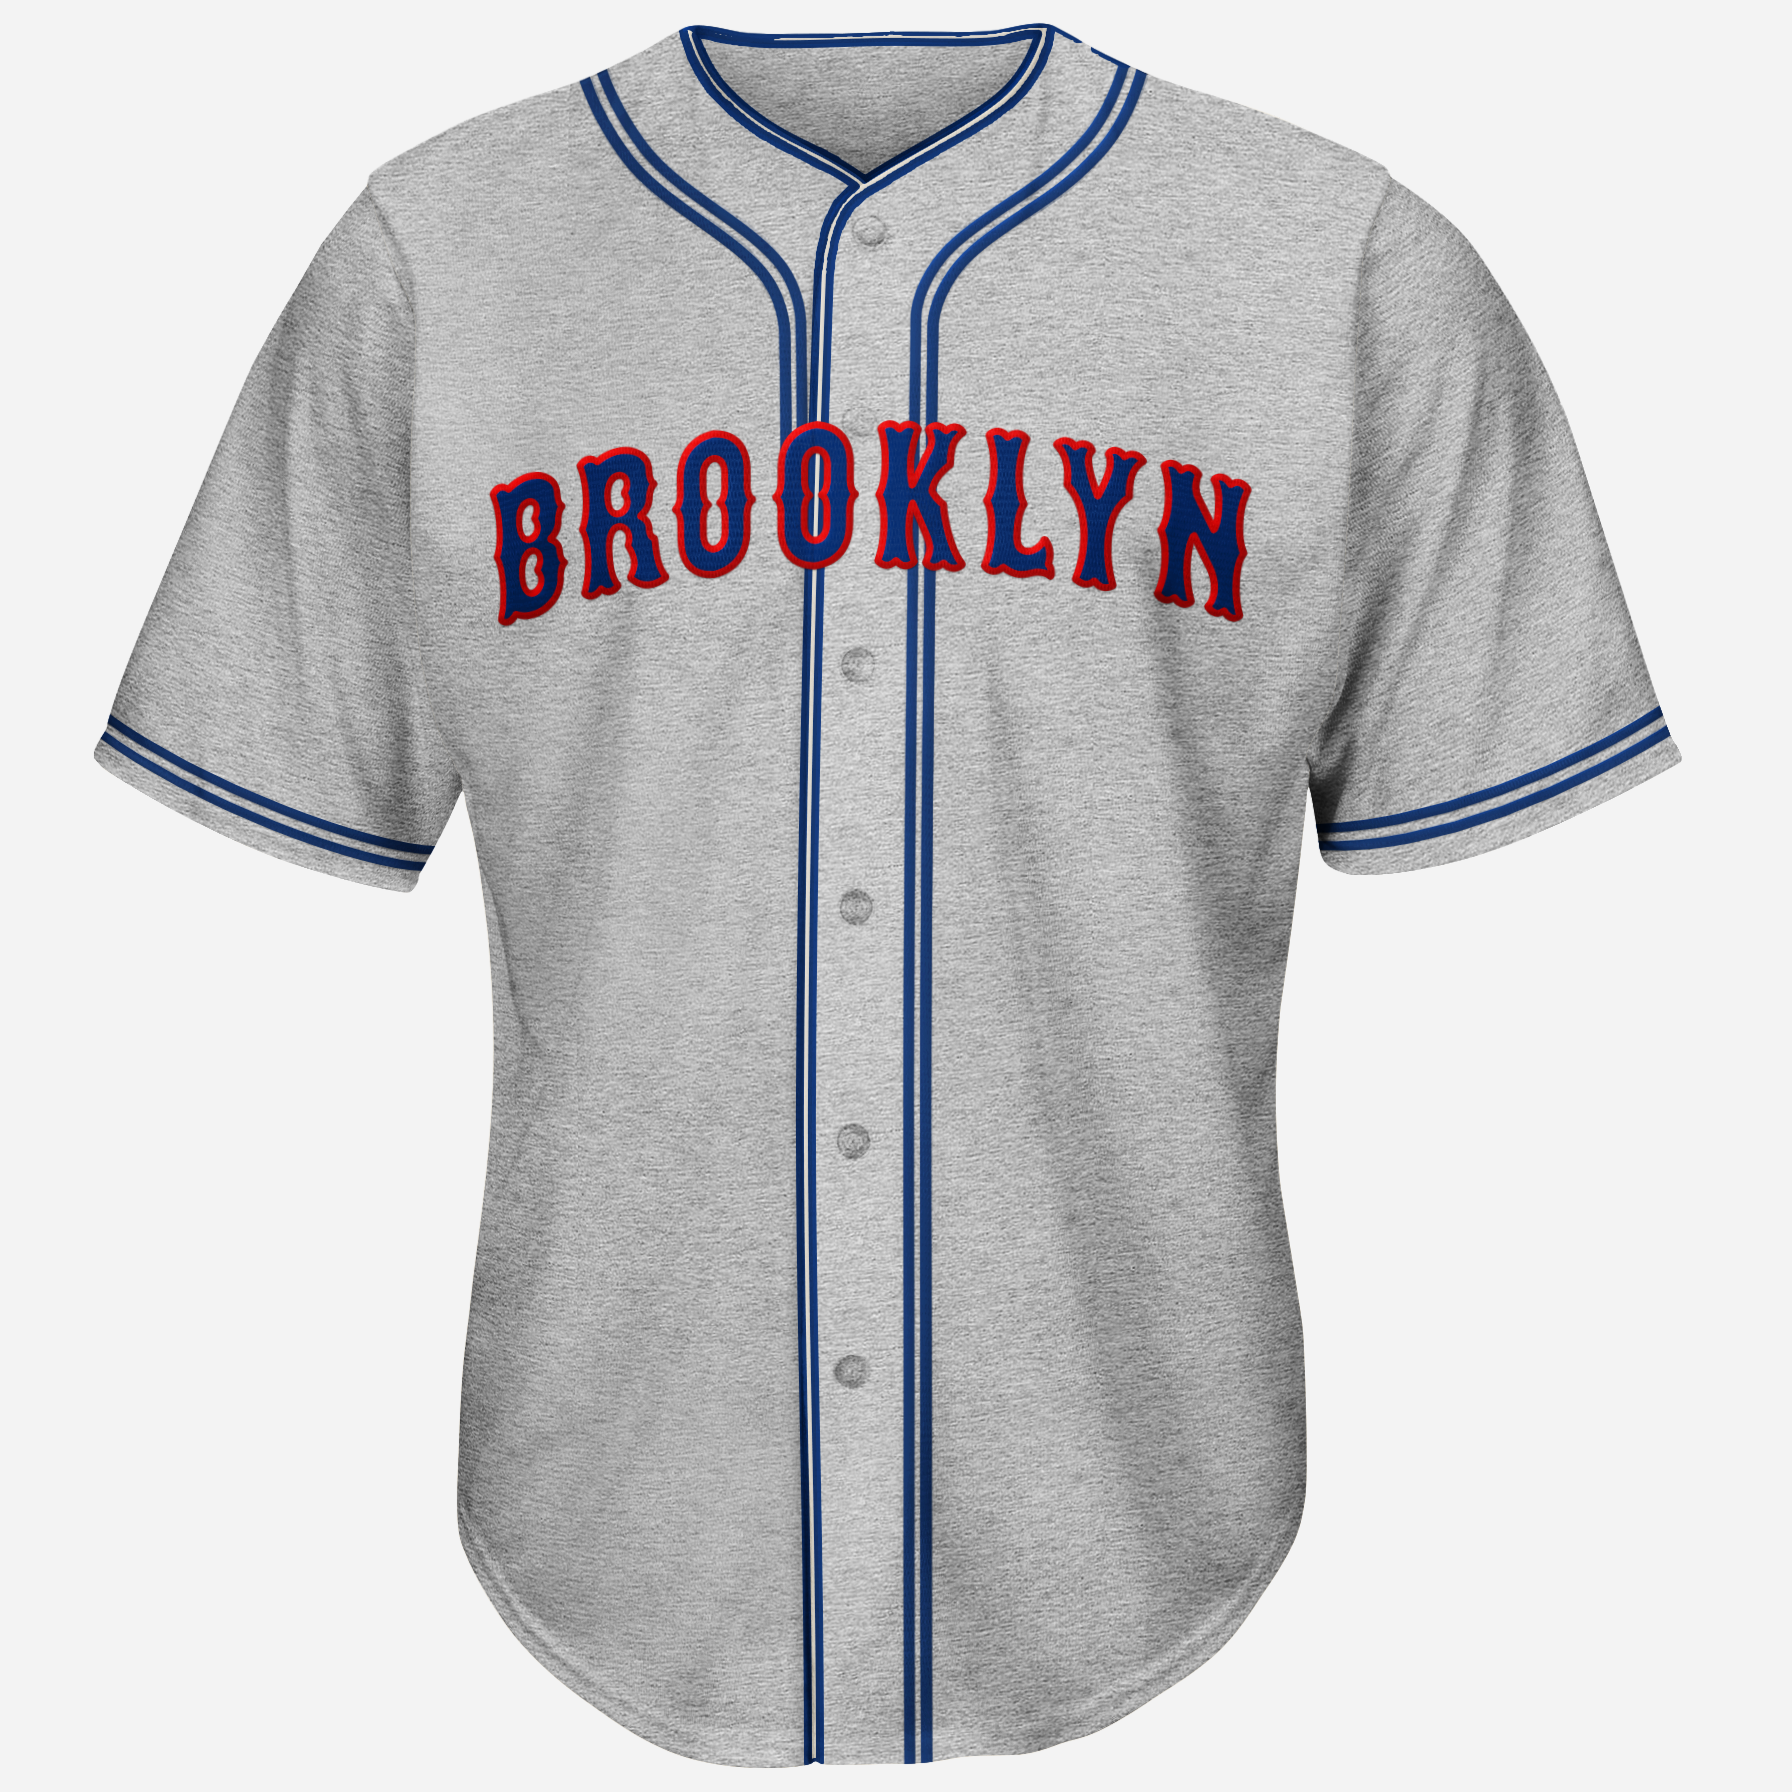 Brooklyn Trolley Dodgers Baseball Apparel Store